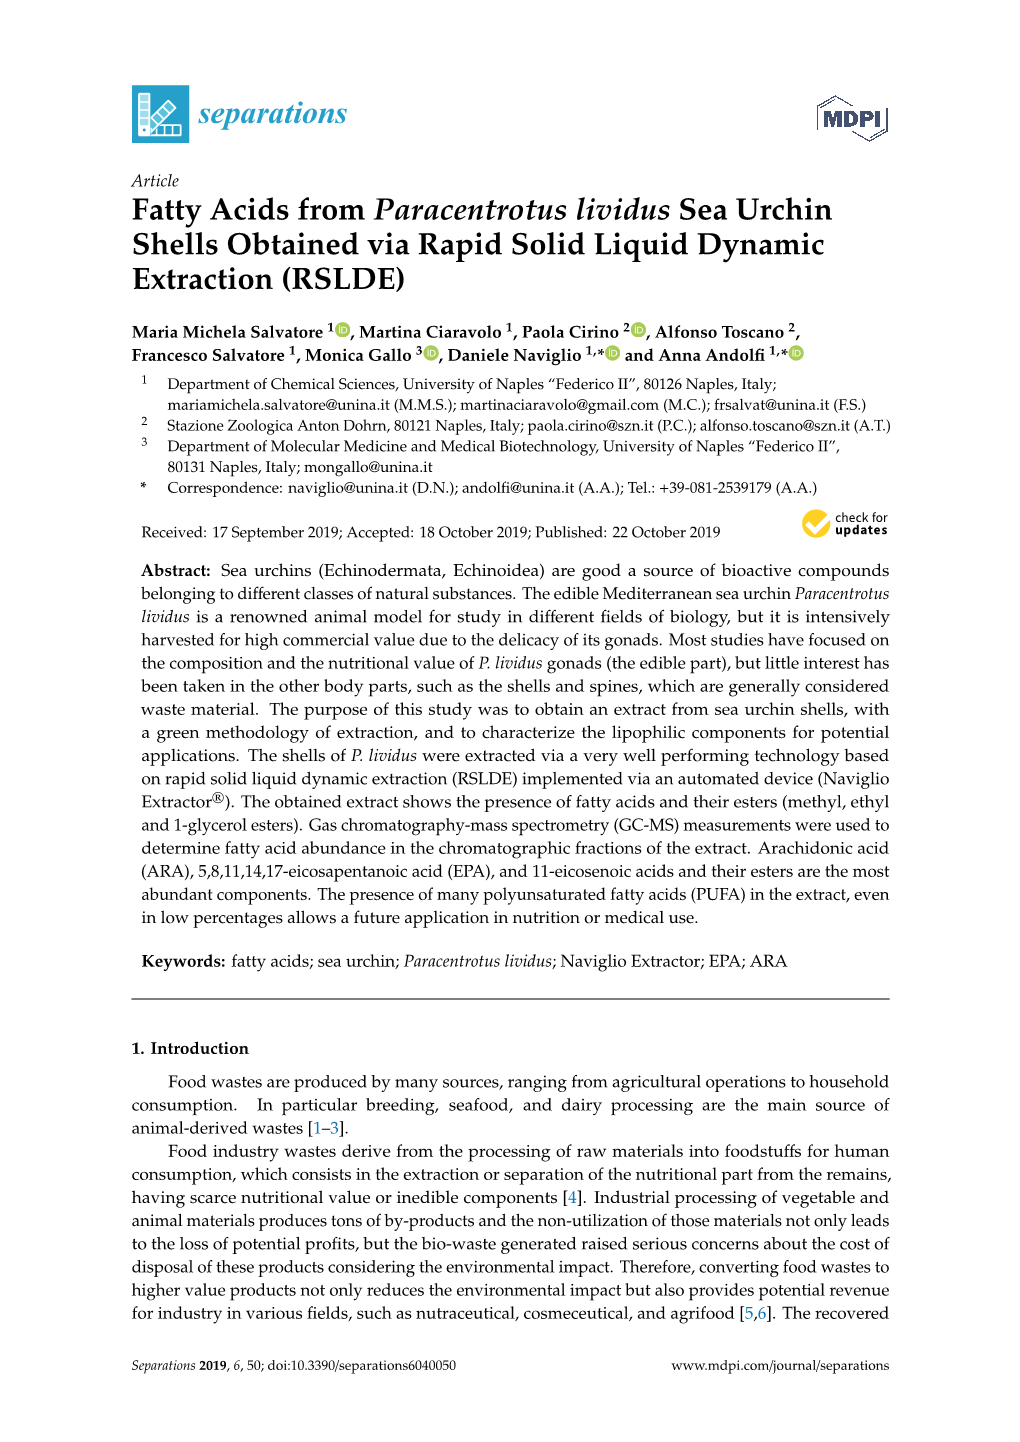 Fatty Acids from Paracentrotus Lividus Sea Urchin Shells Obtained Via Rapid Solid Liquid Dynamic Extraction (RSLDE)